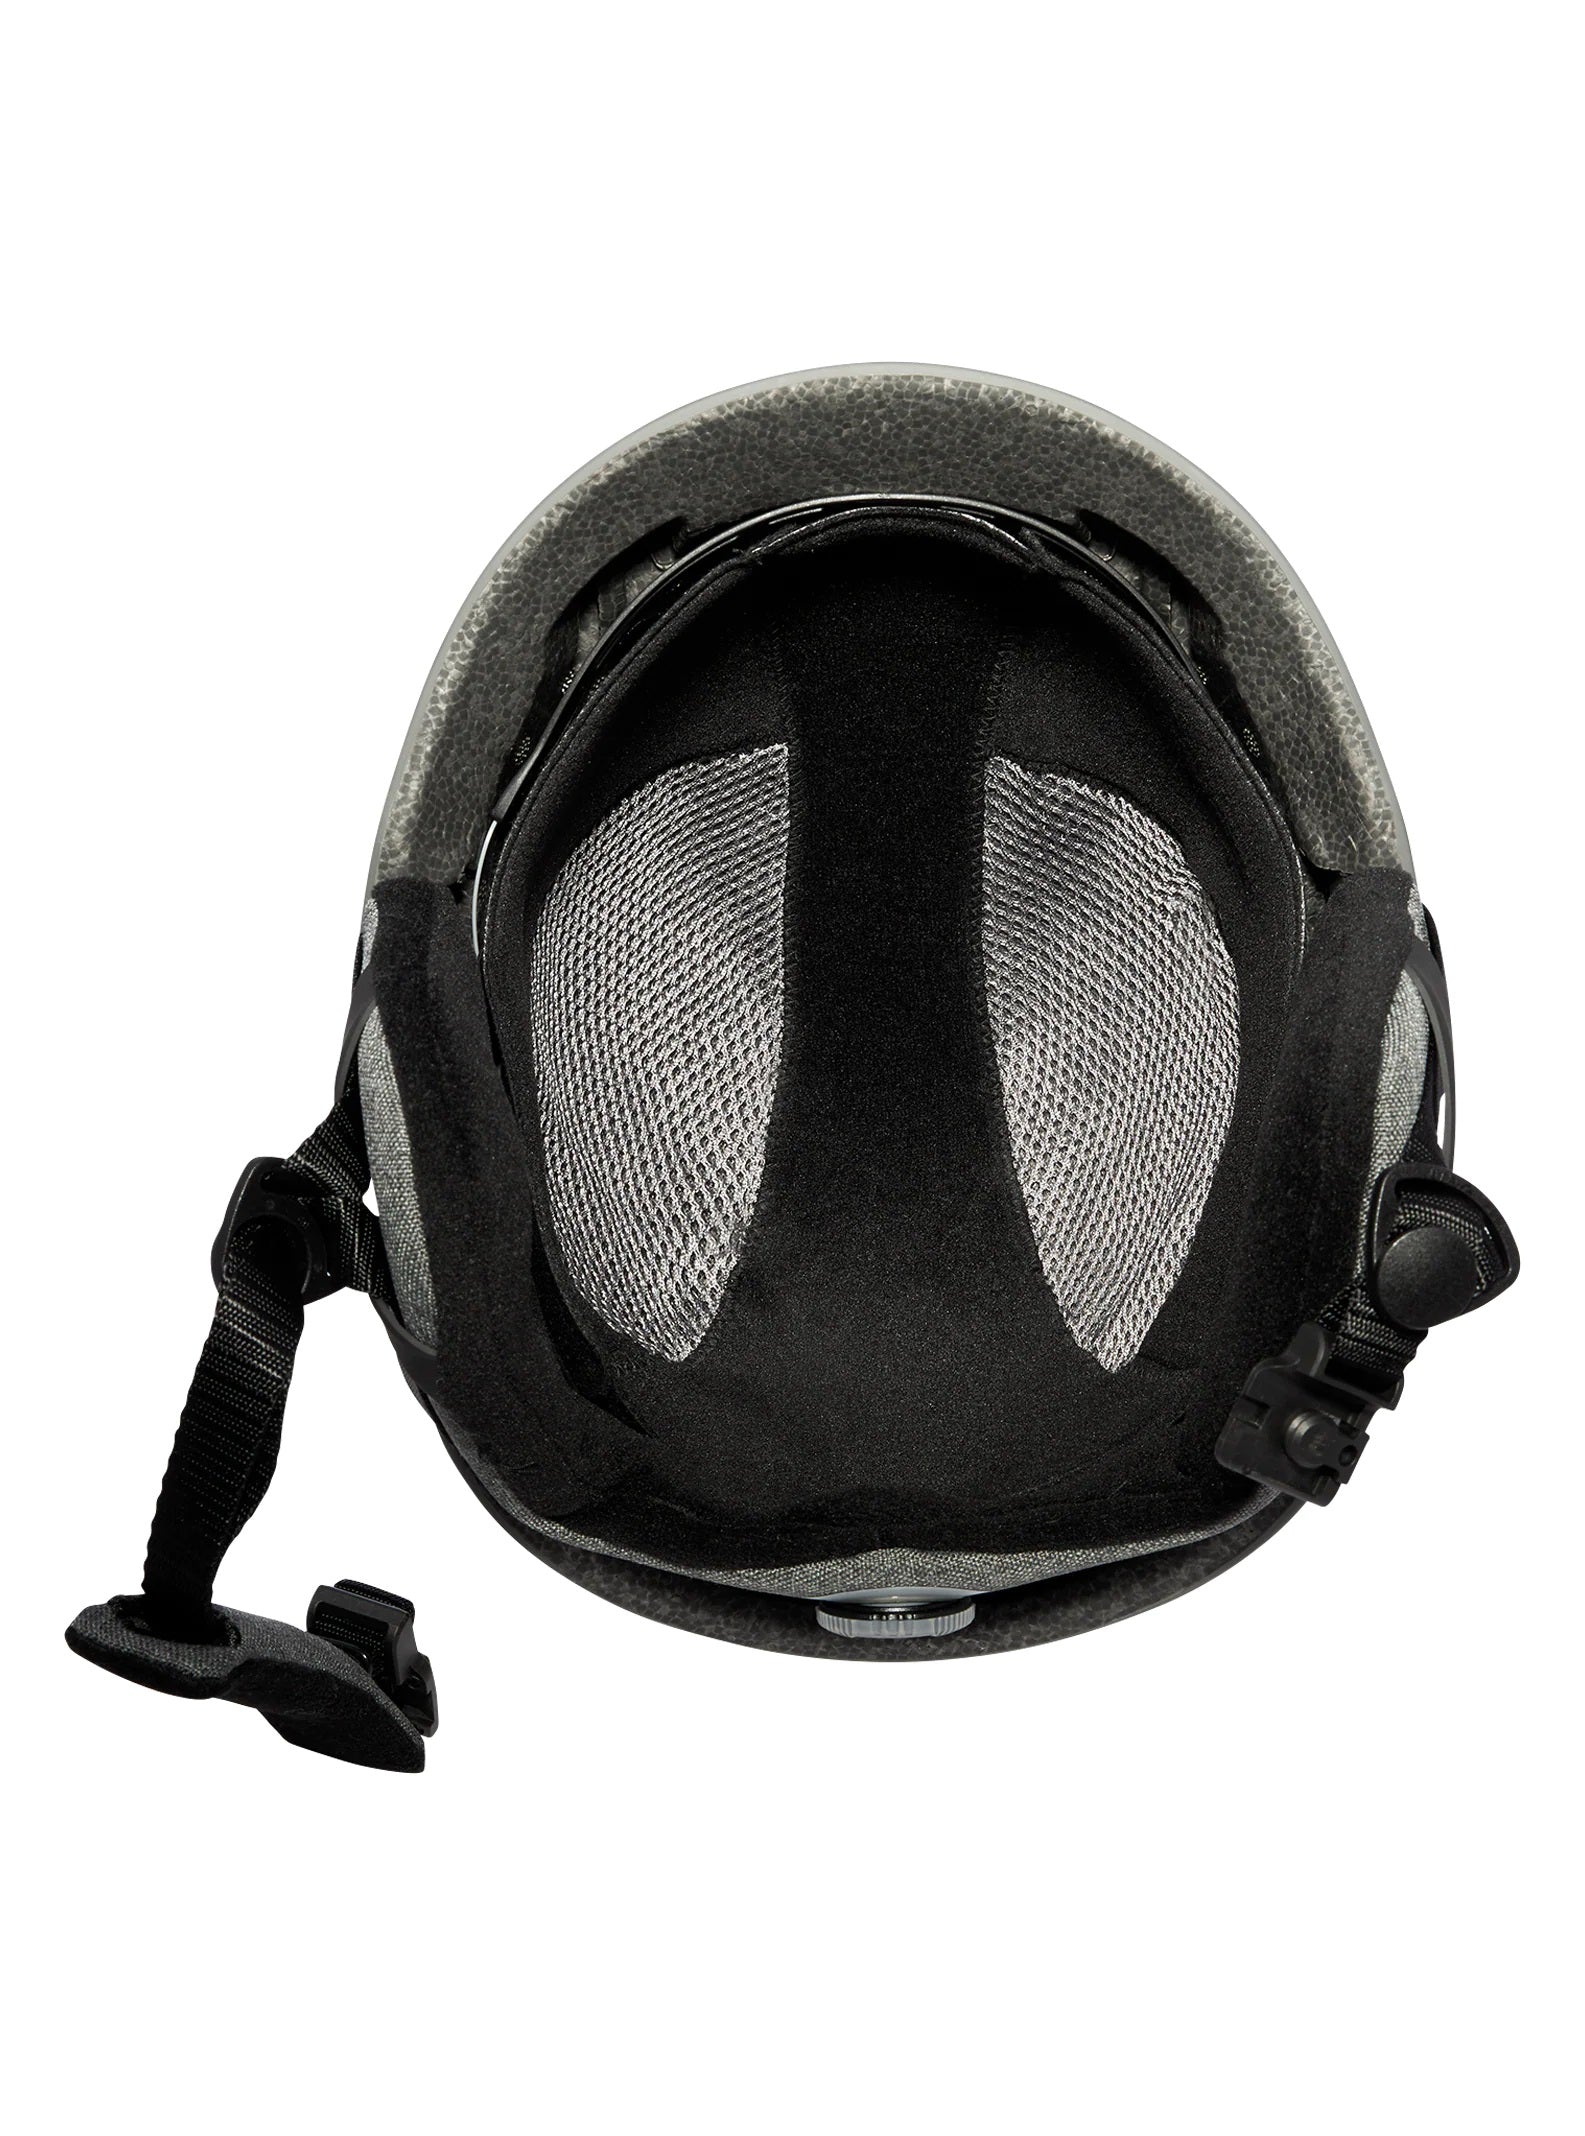 Anon Rodan Helmet 2023 Black